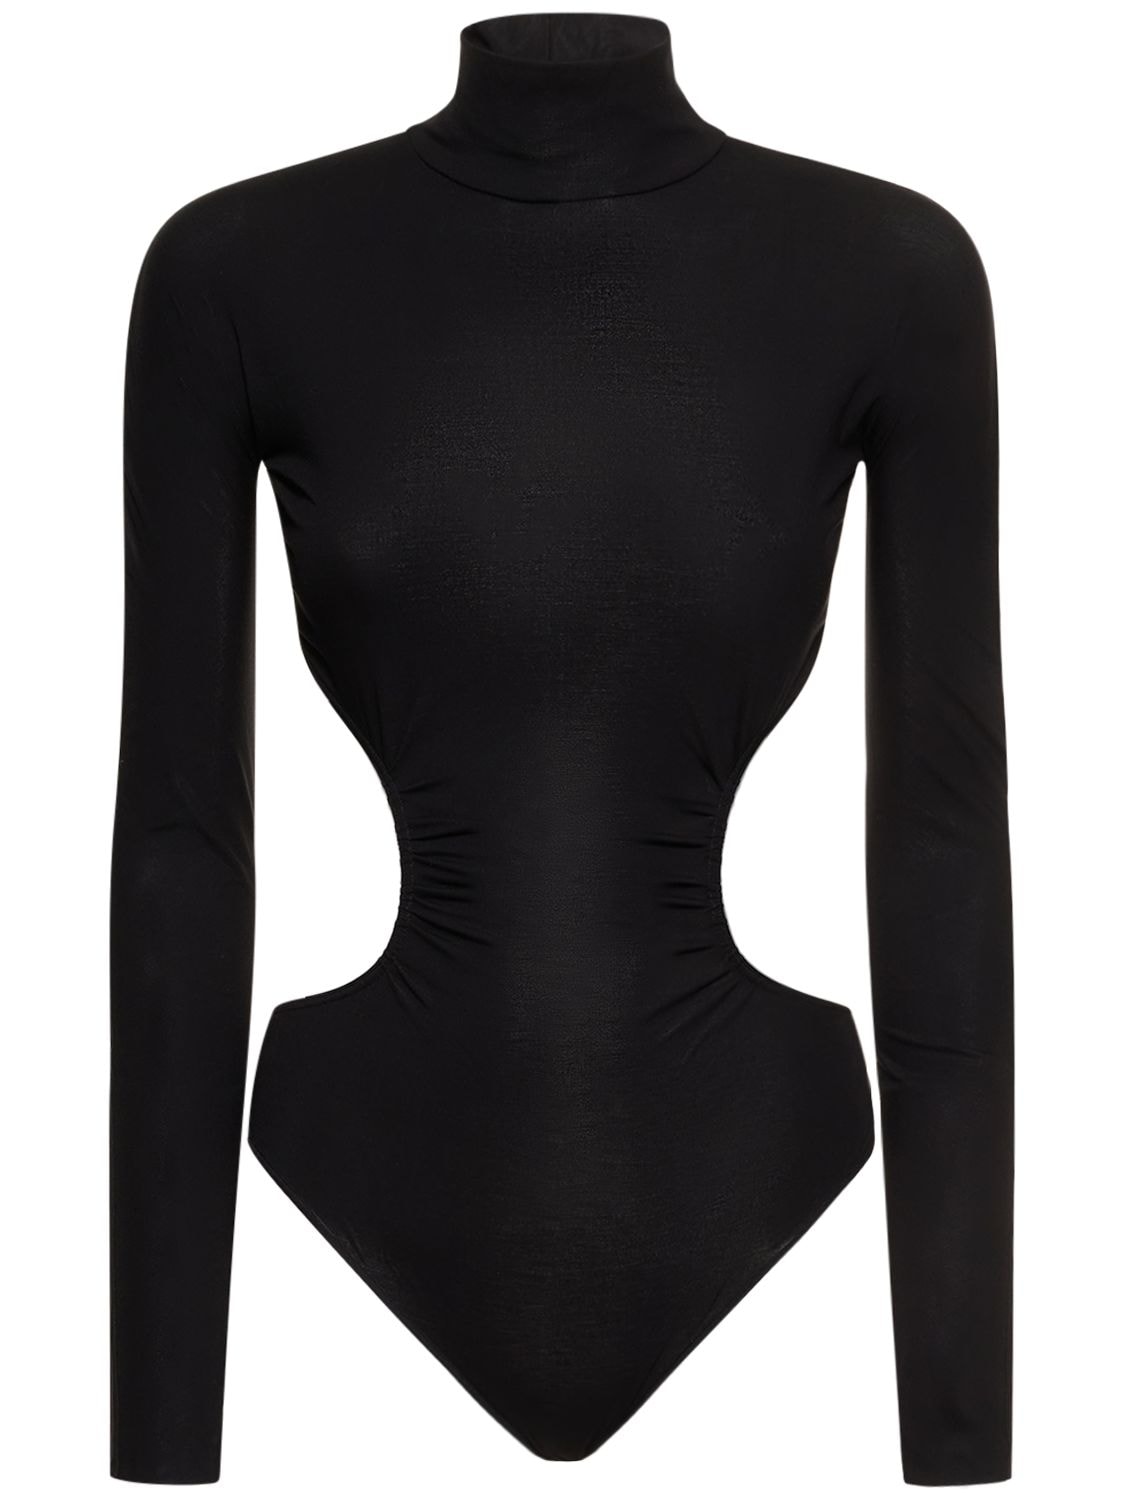 Wolford Alida String Bodysuit in Black